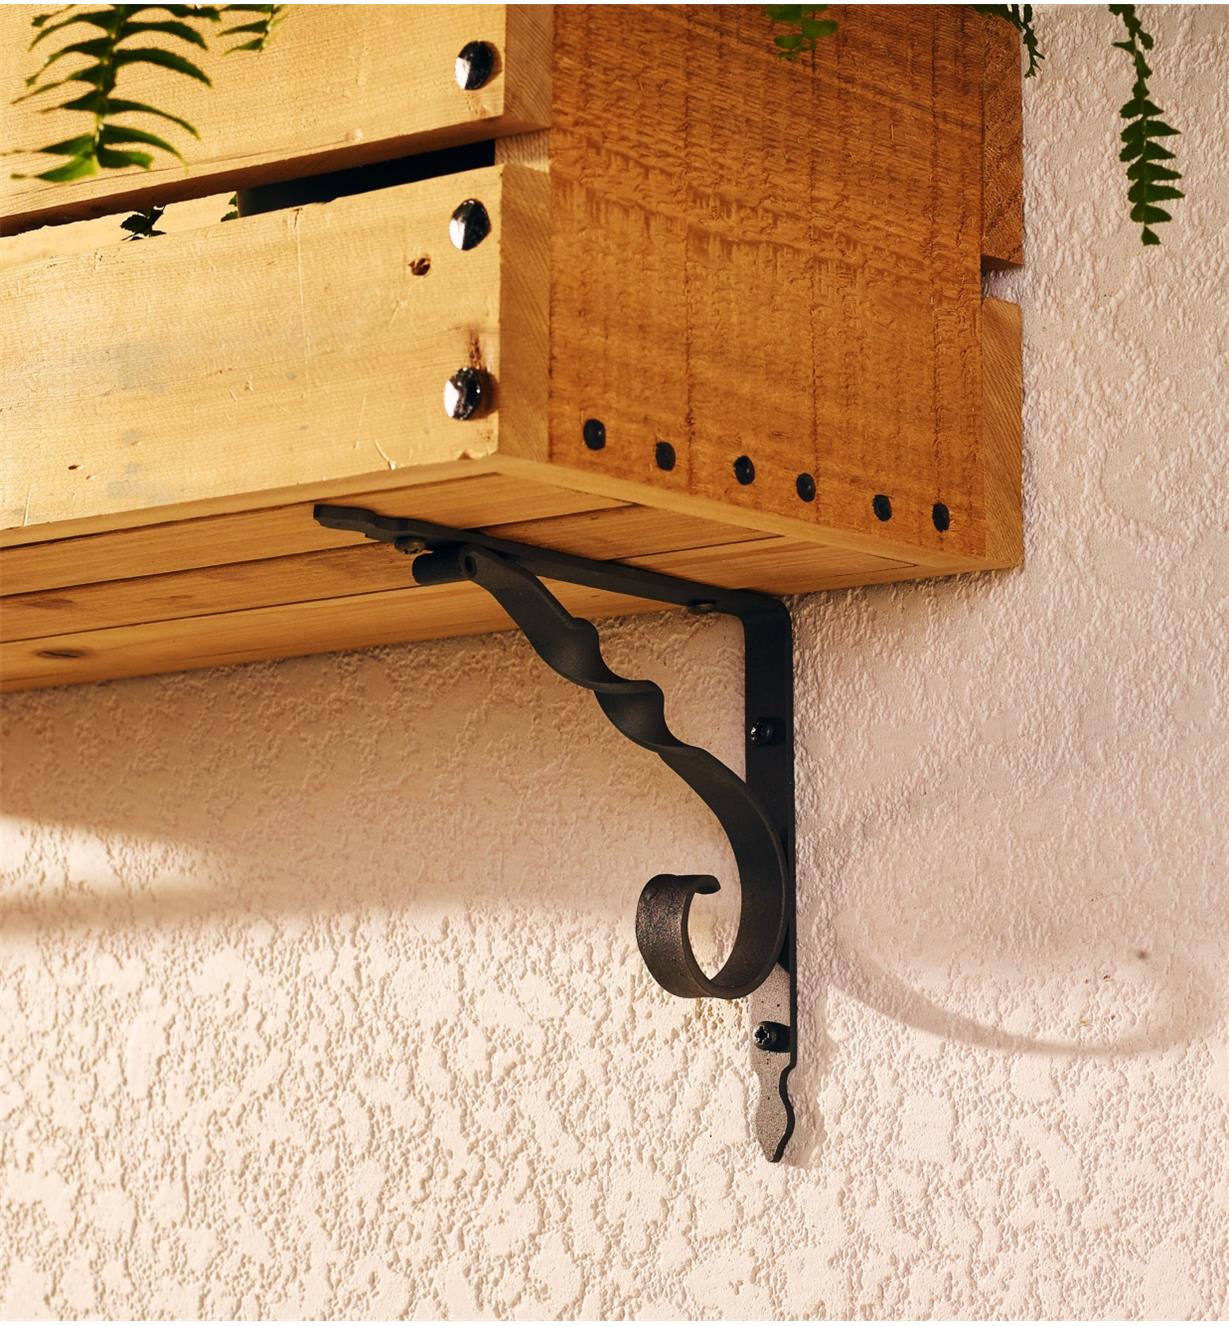 Shelf bracket used to attach a planter box to a wall